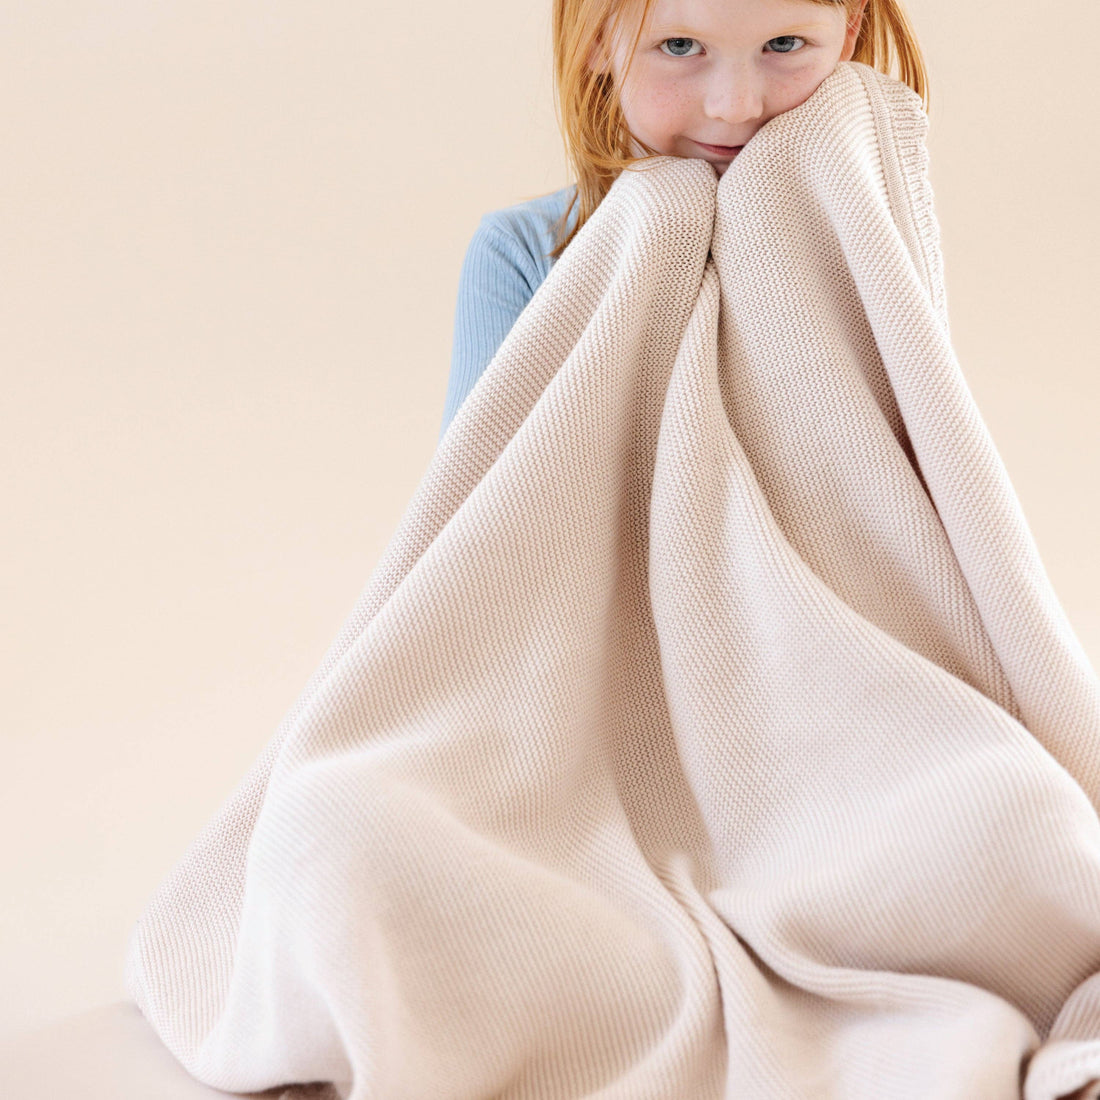 Organic Cotton Scalloped Baby Blanket - Nora Shell